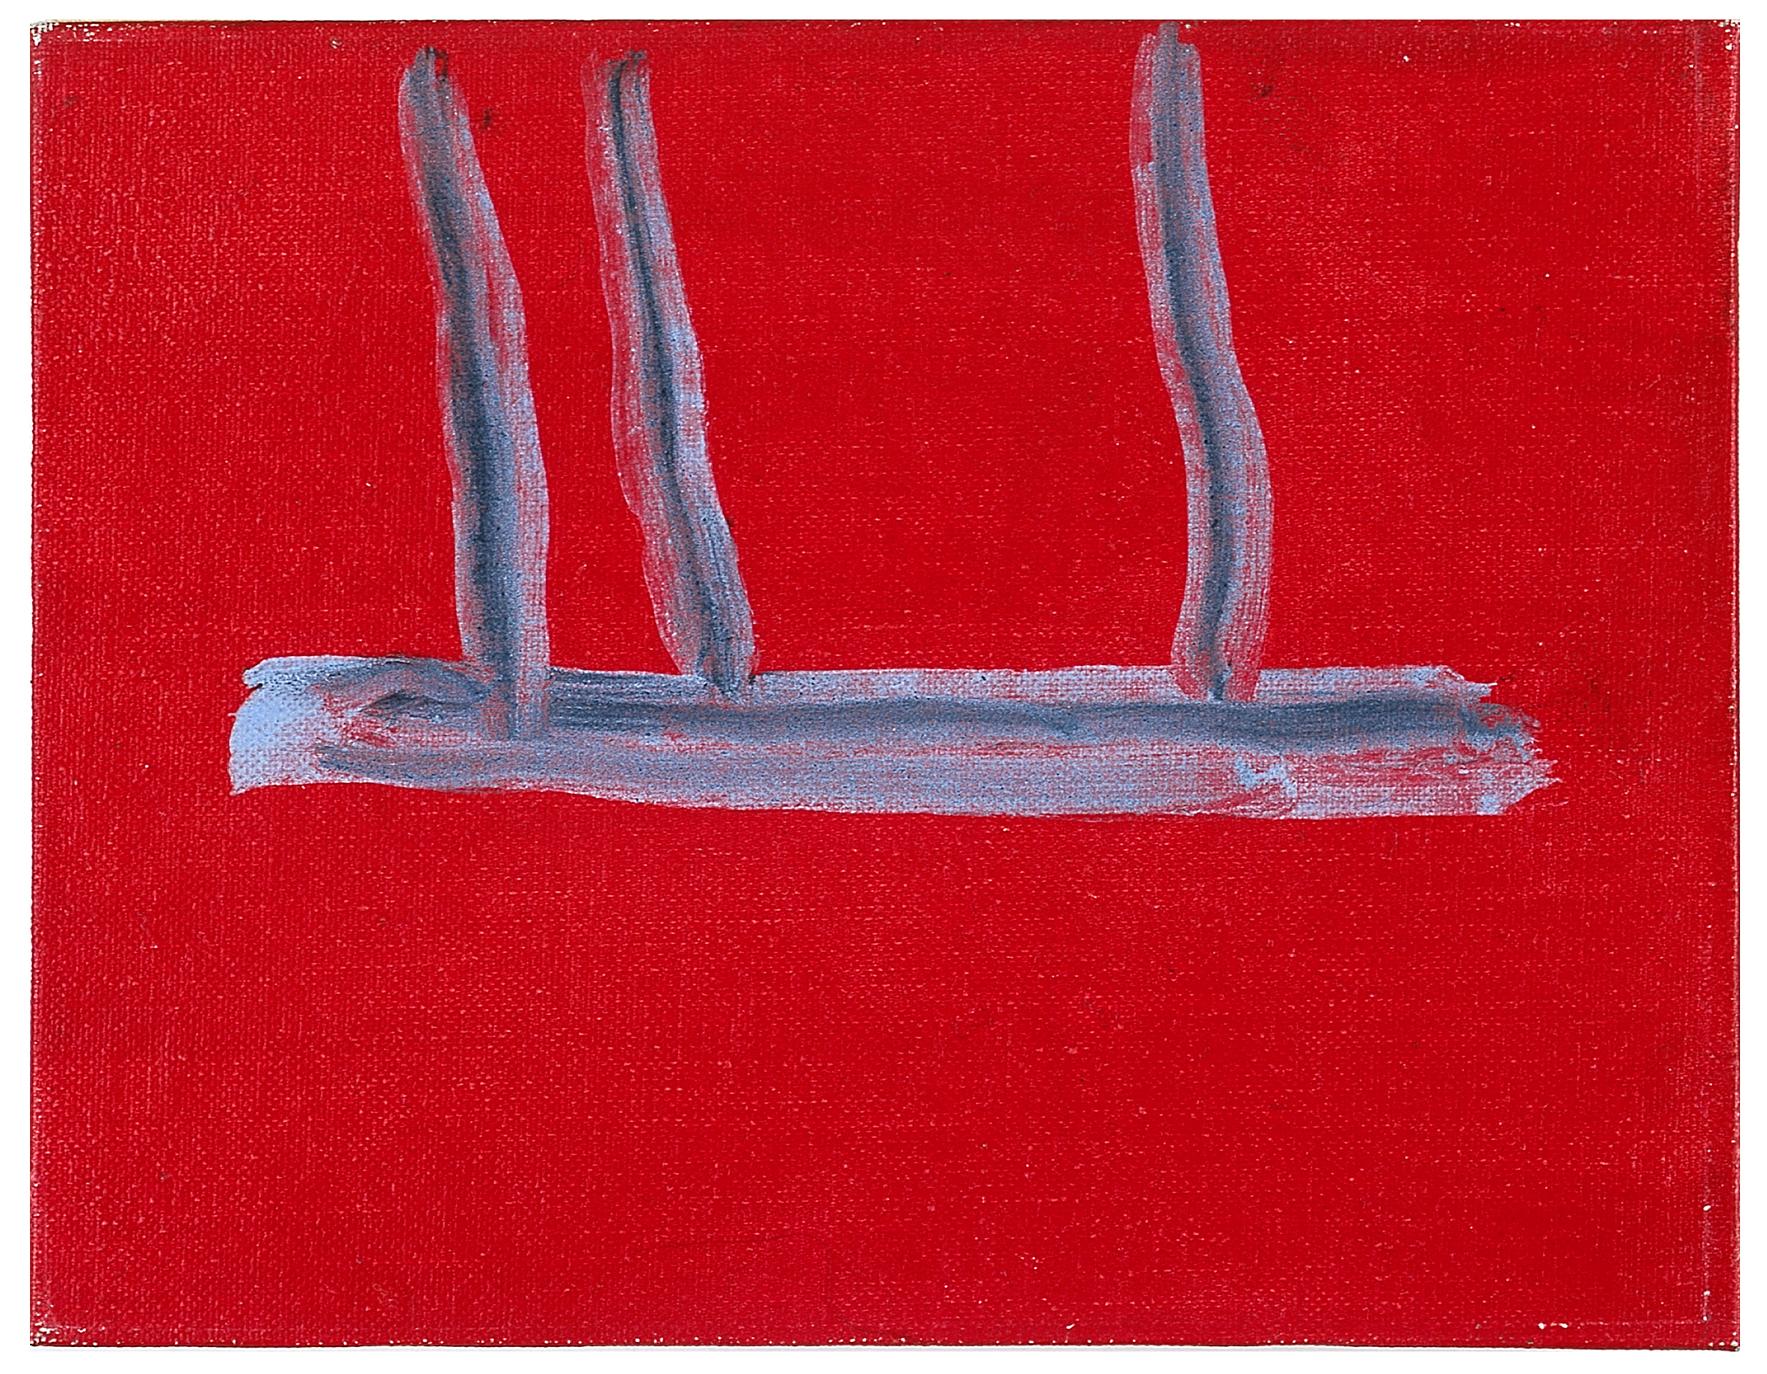 Abstract Painting Robert Motherwell - Sans titre (Ouvert en rouge)